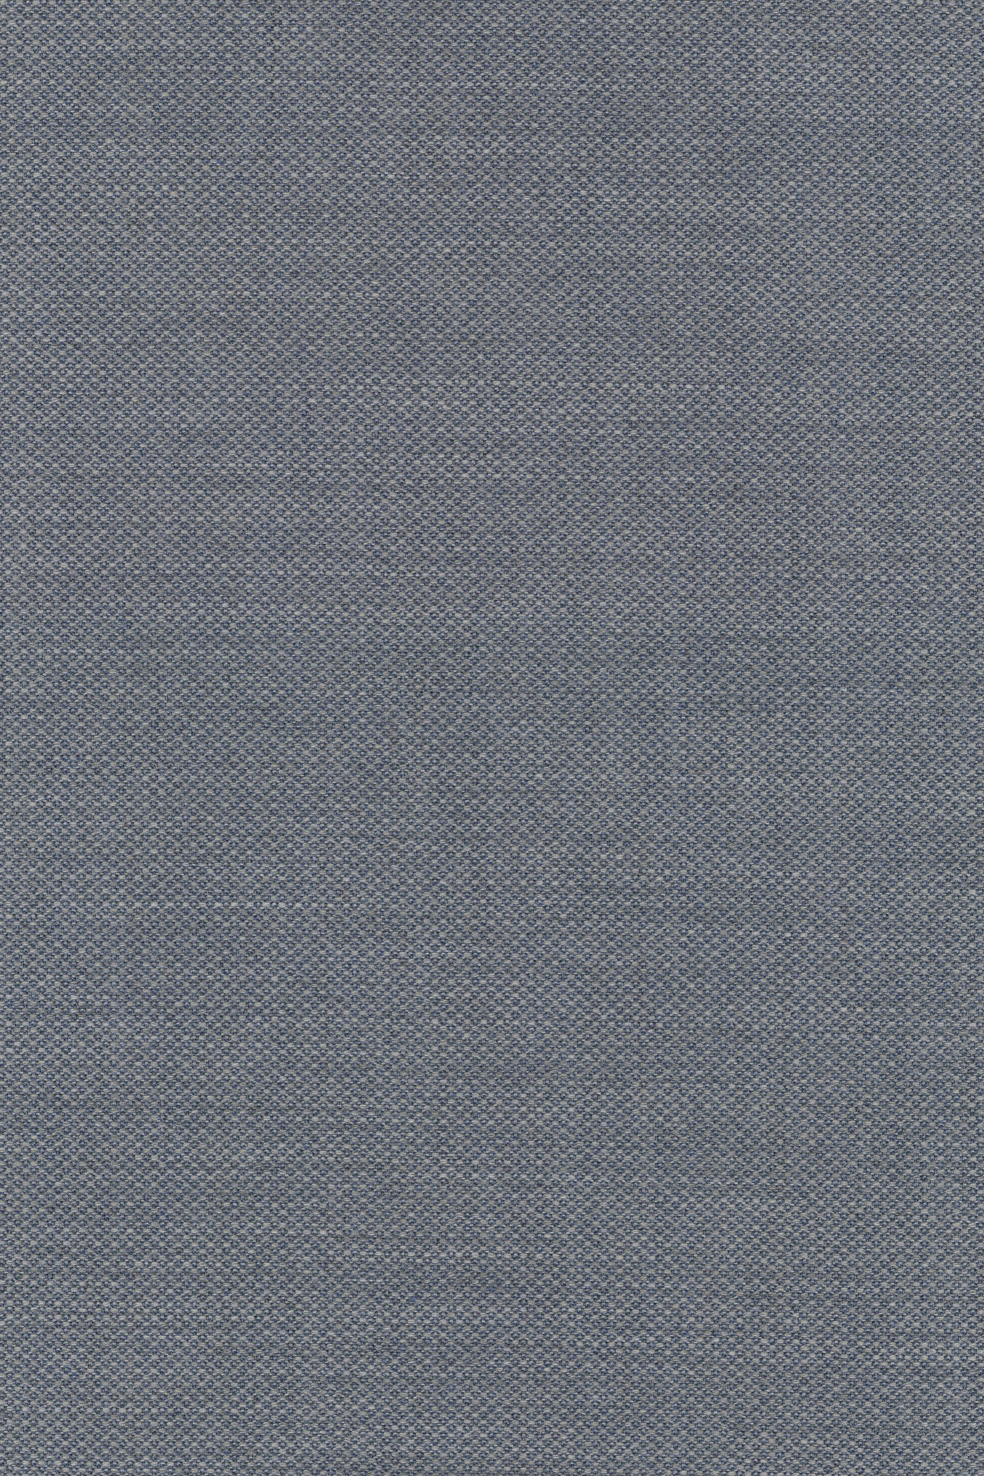 Fabric sample Fiord 751 blue